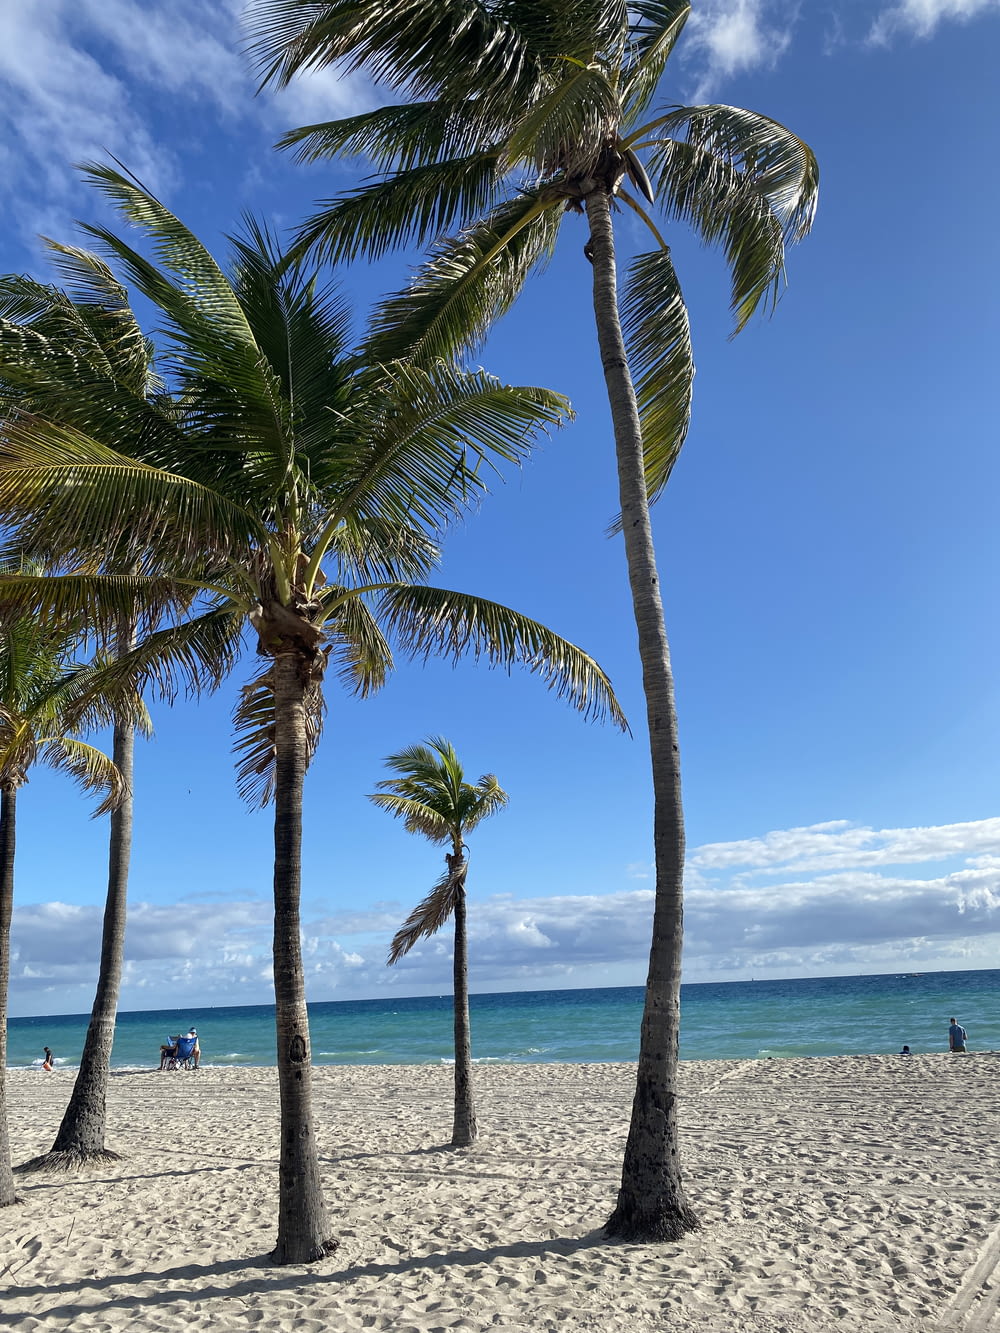 a beach with palm trees and a blue sky